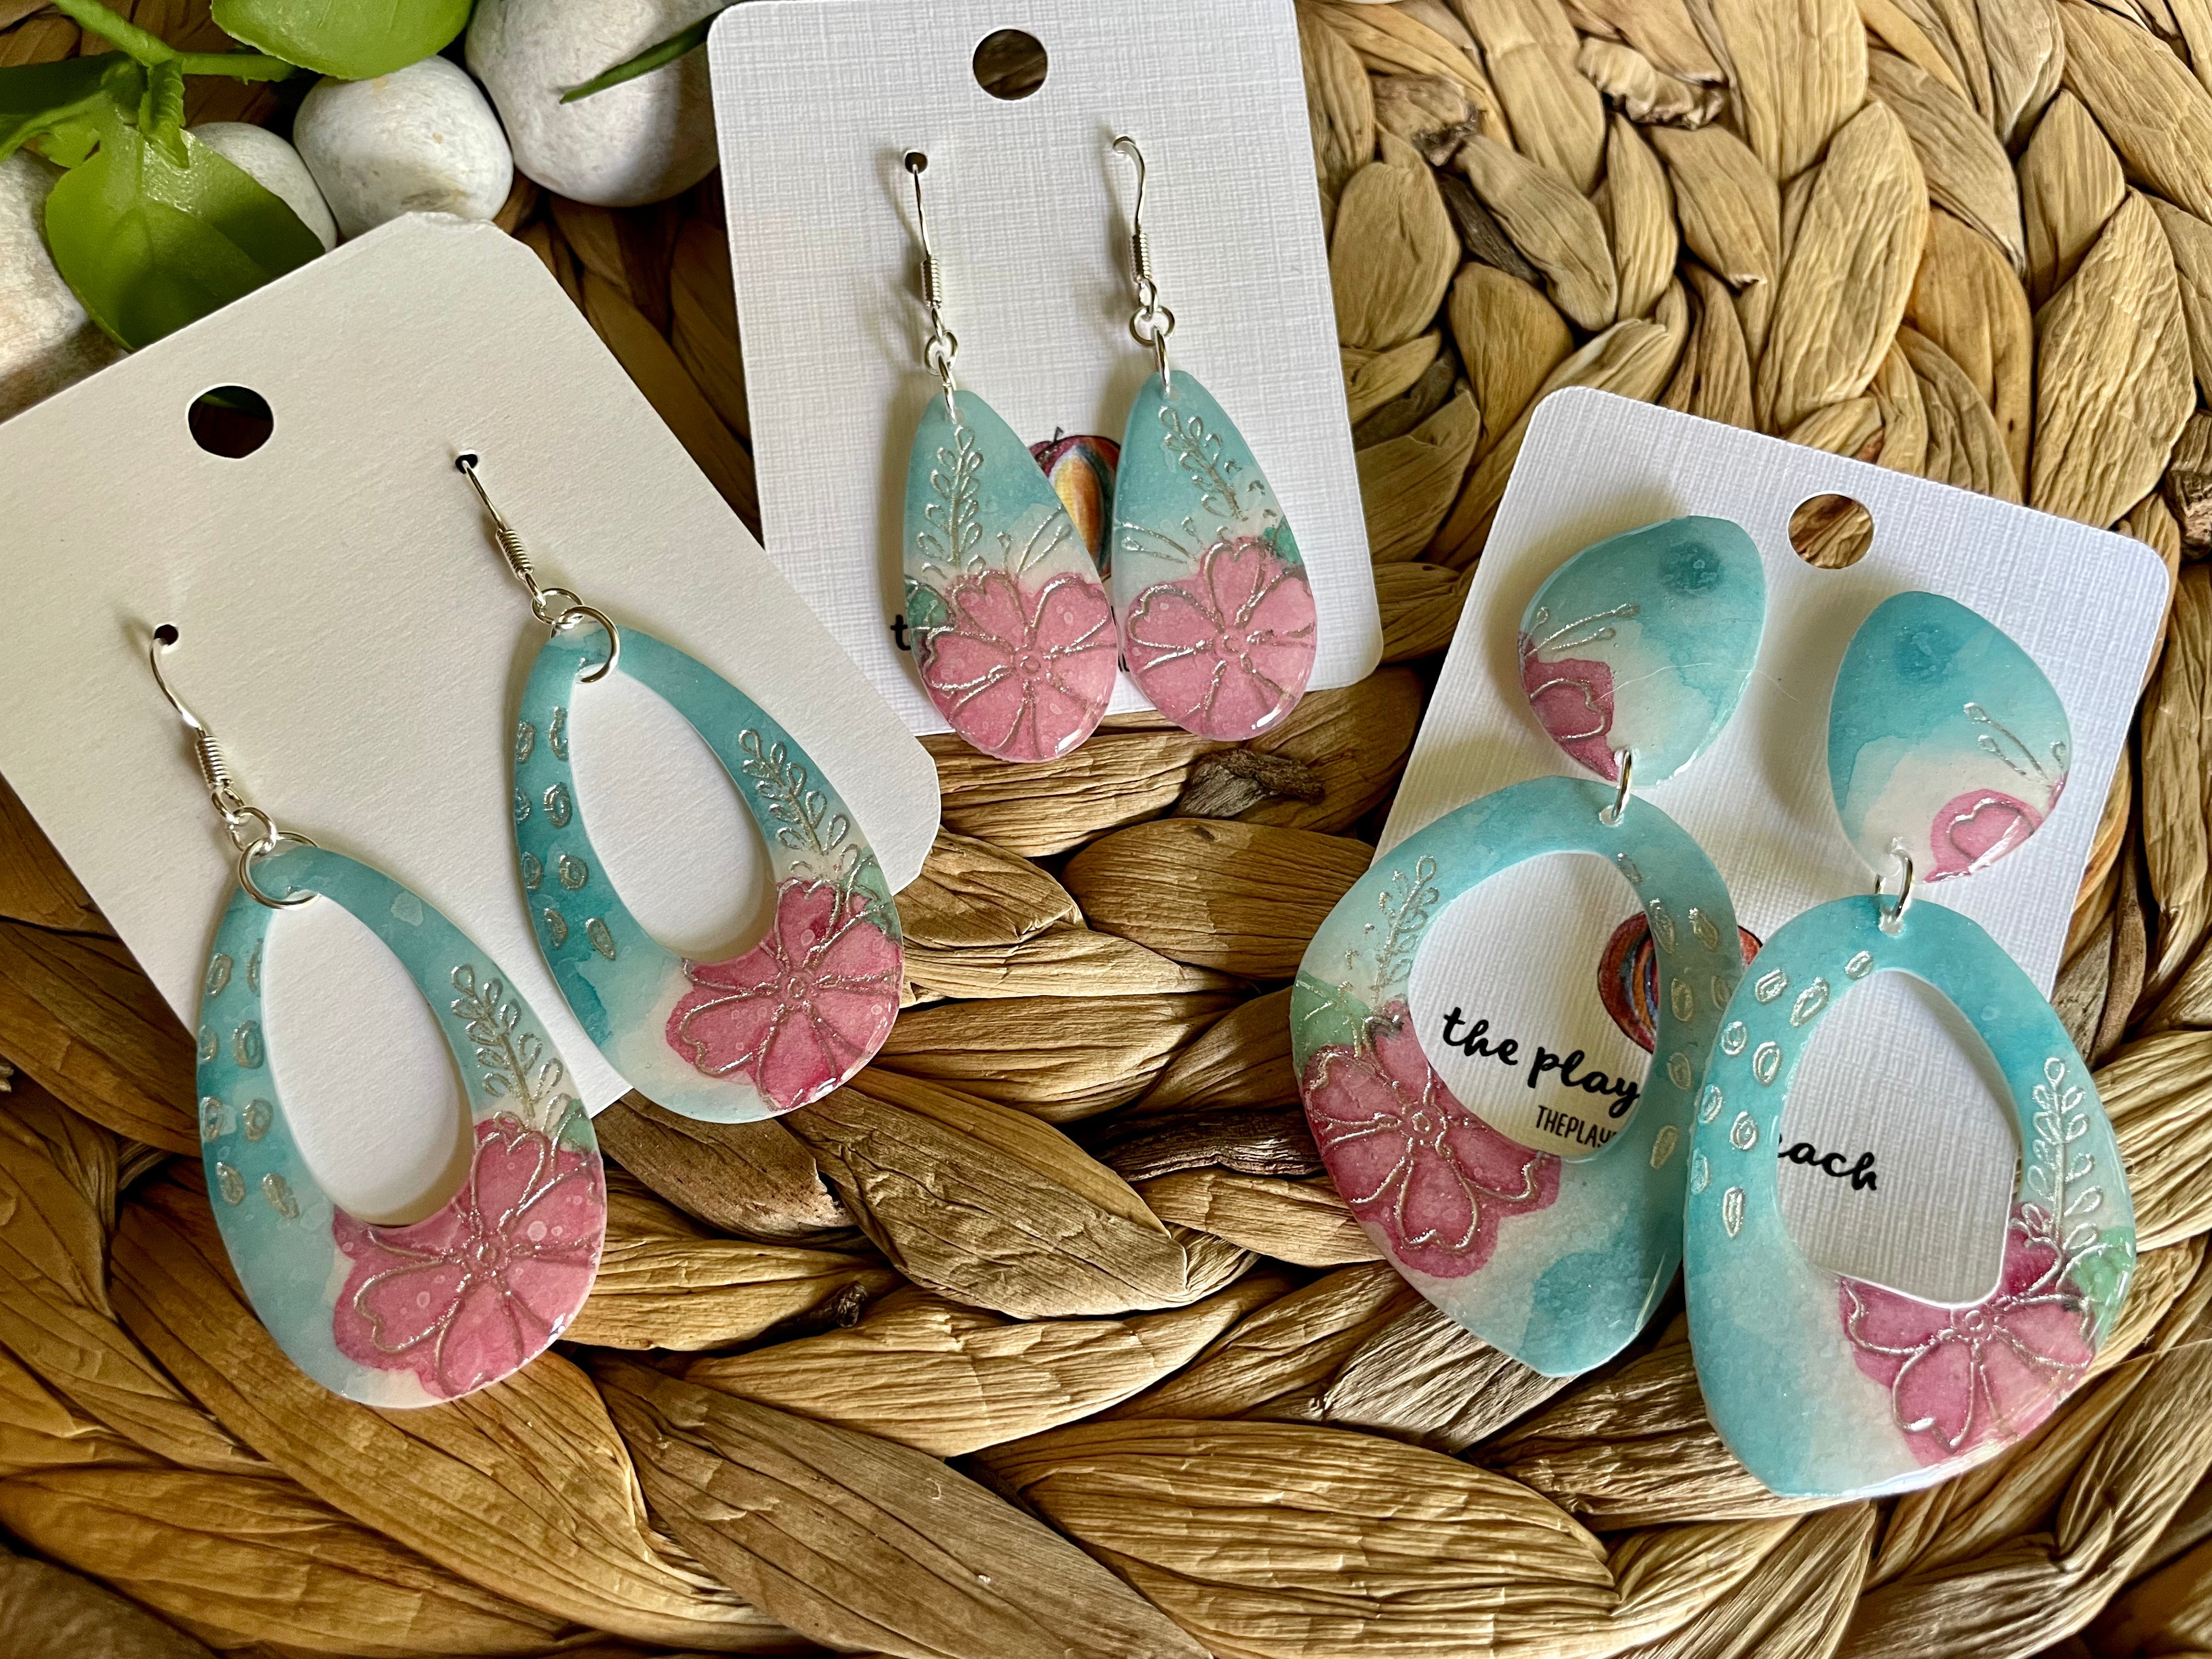 Original handpainted Watercolor floral earrings with metallic foil